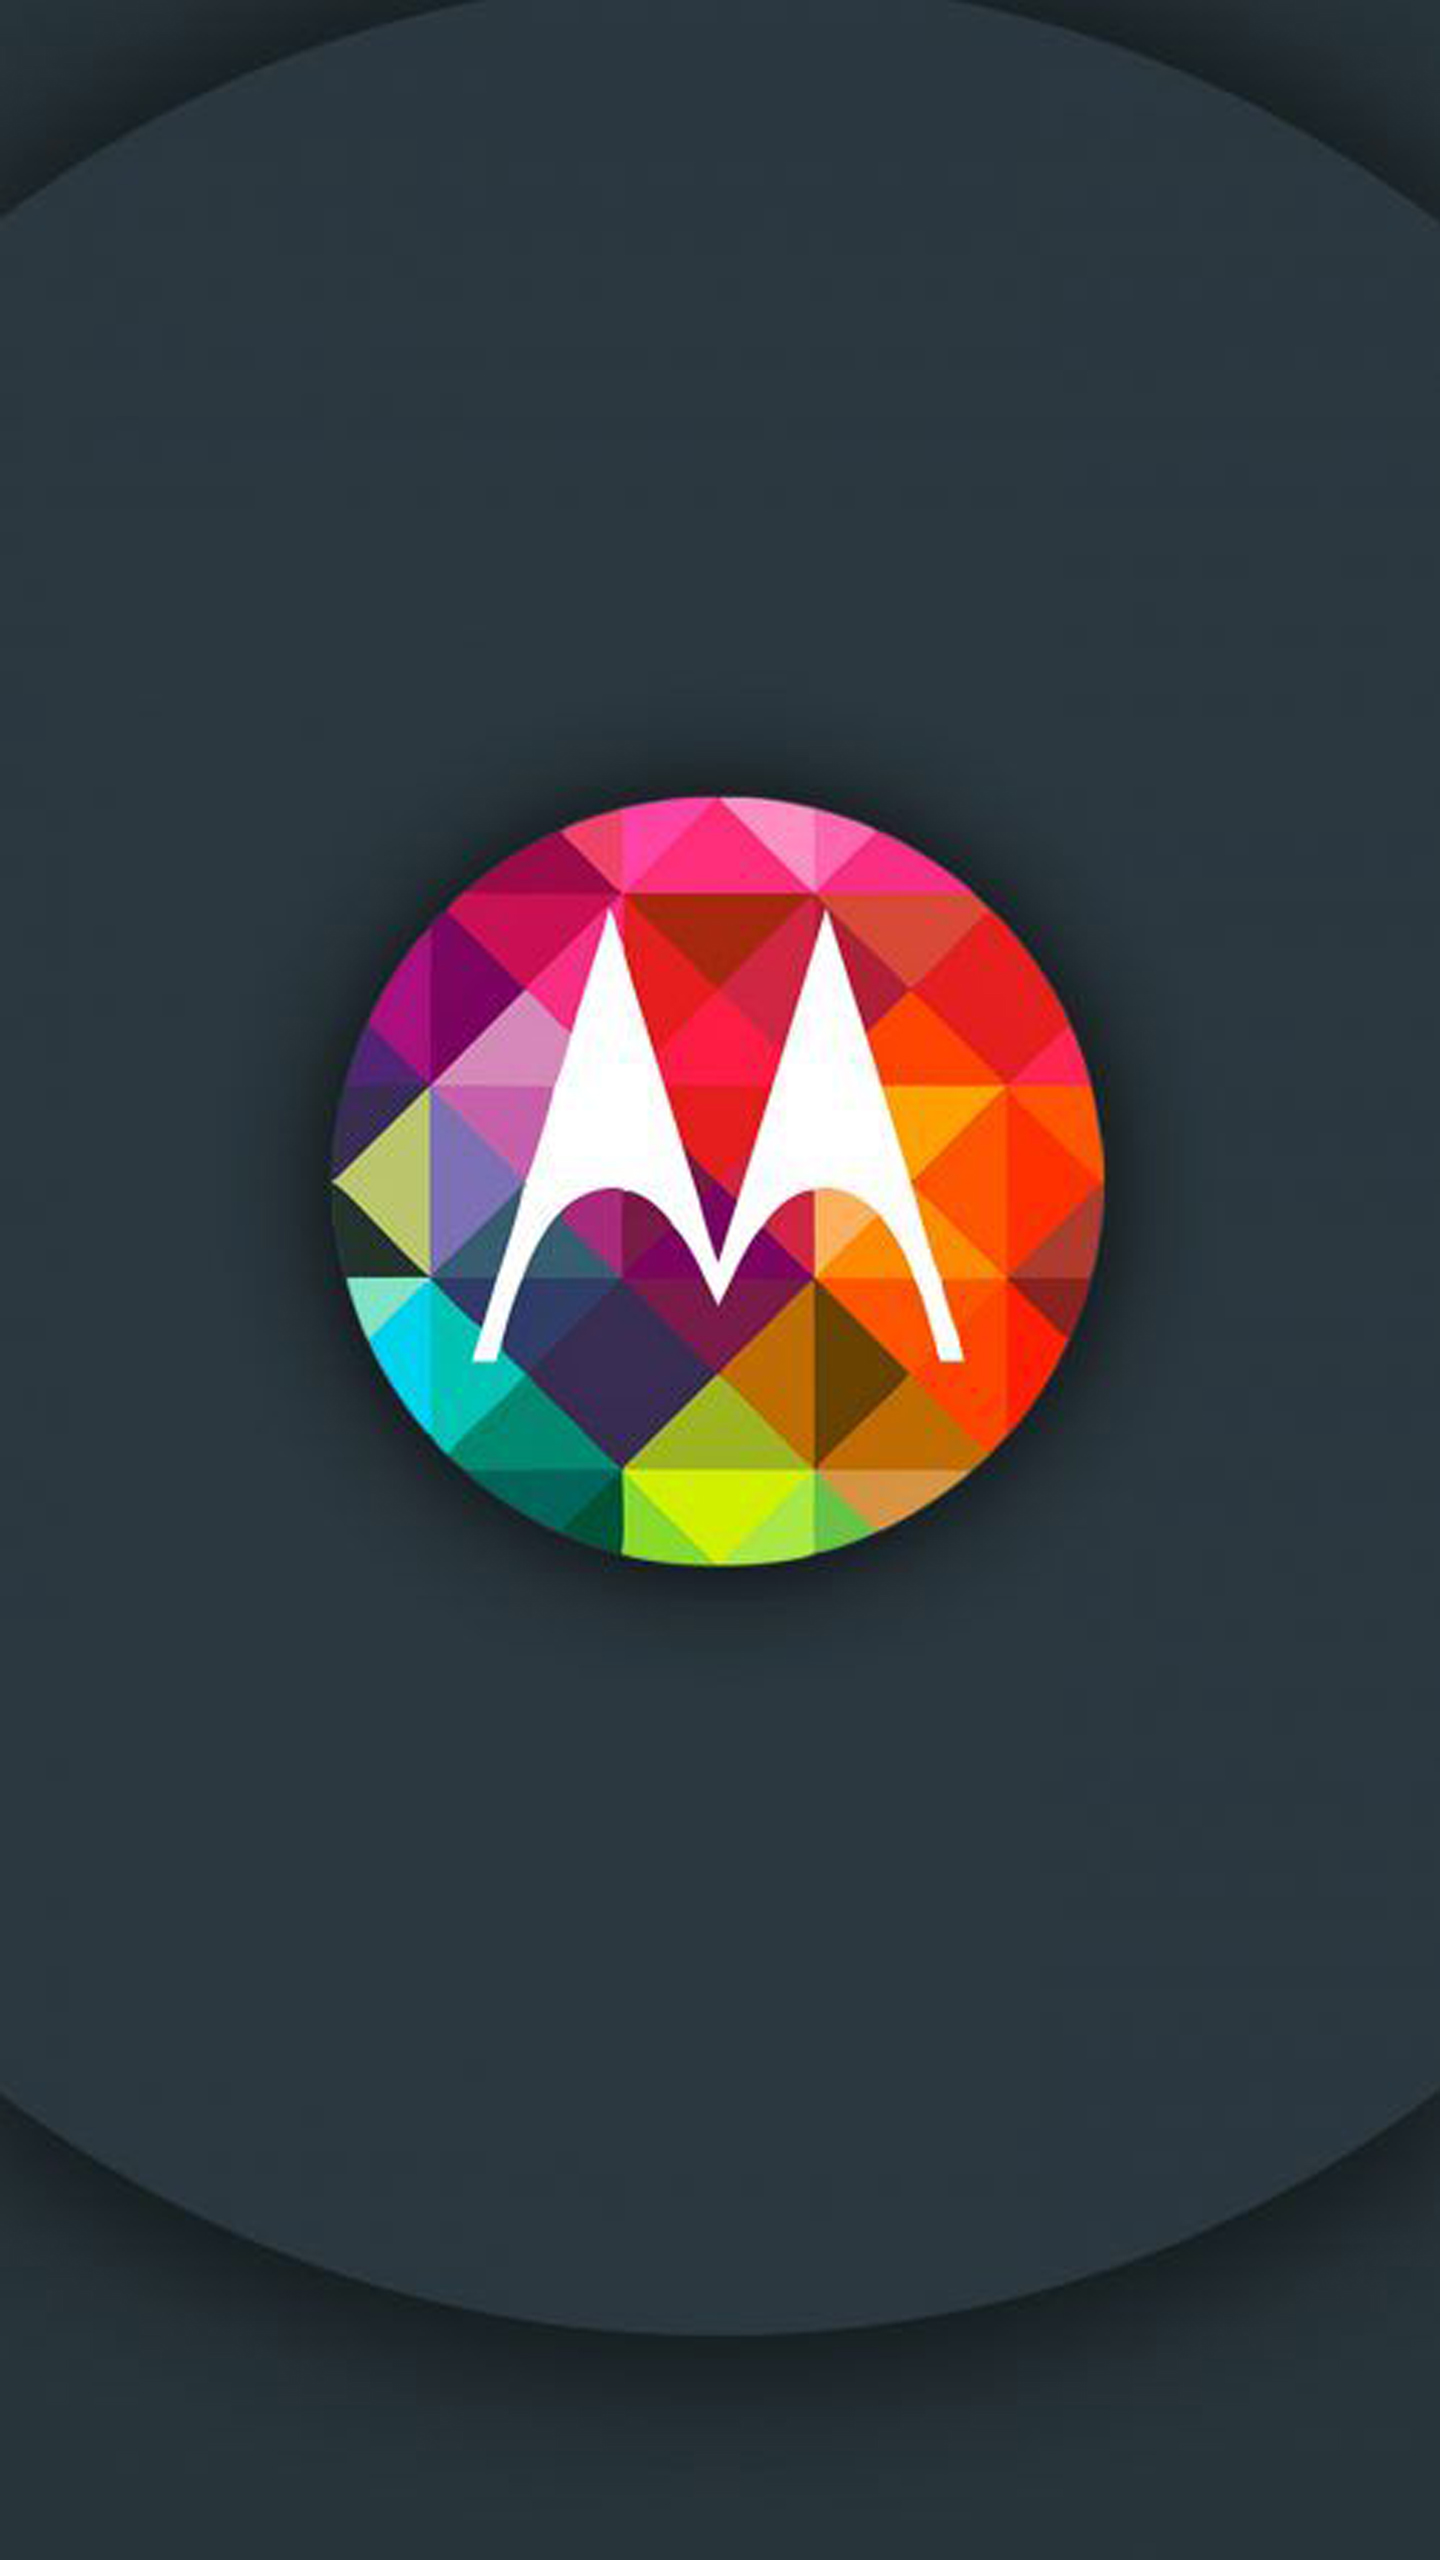 Motorola Moto Z Wallpaper with Logo | HD Wallpapers for Free